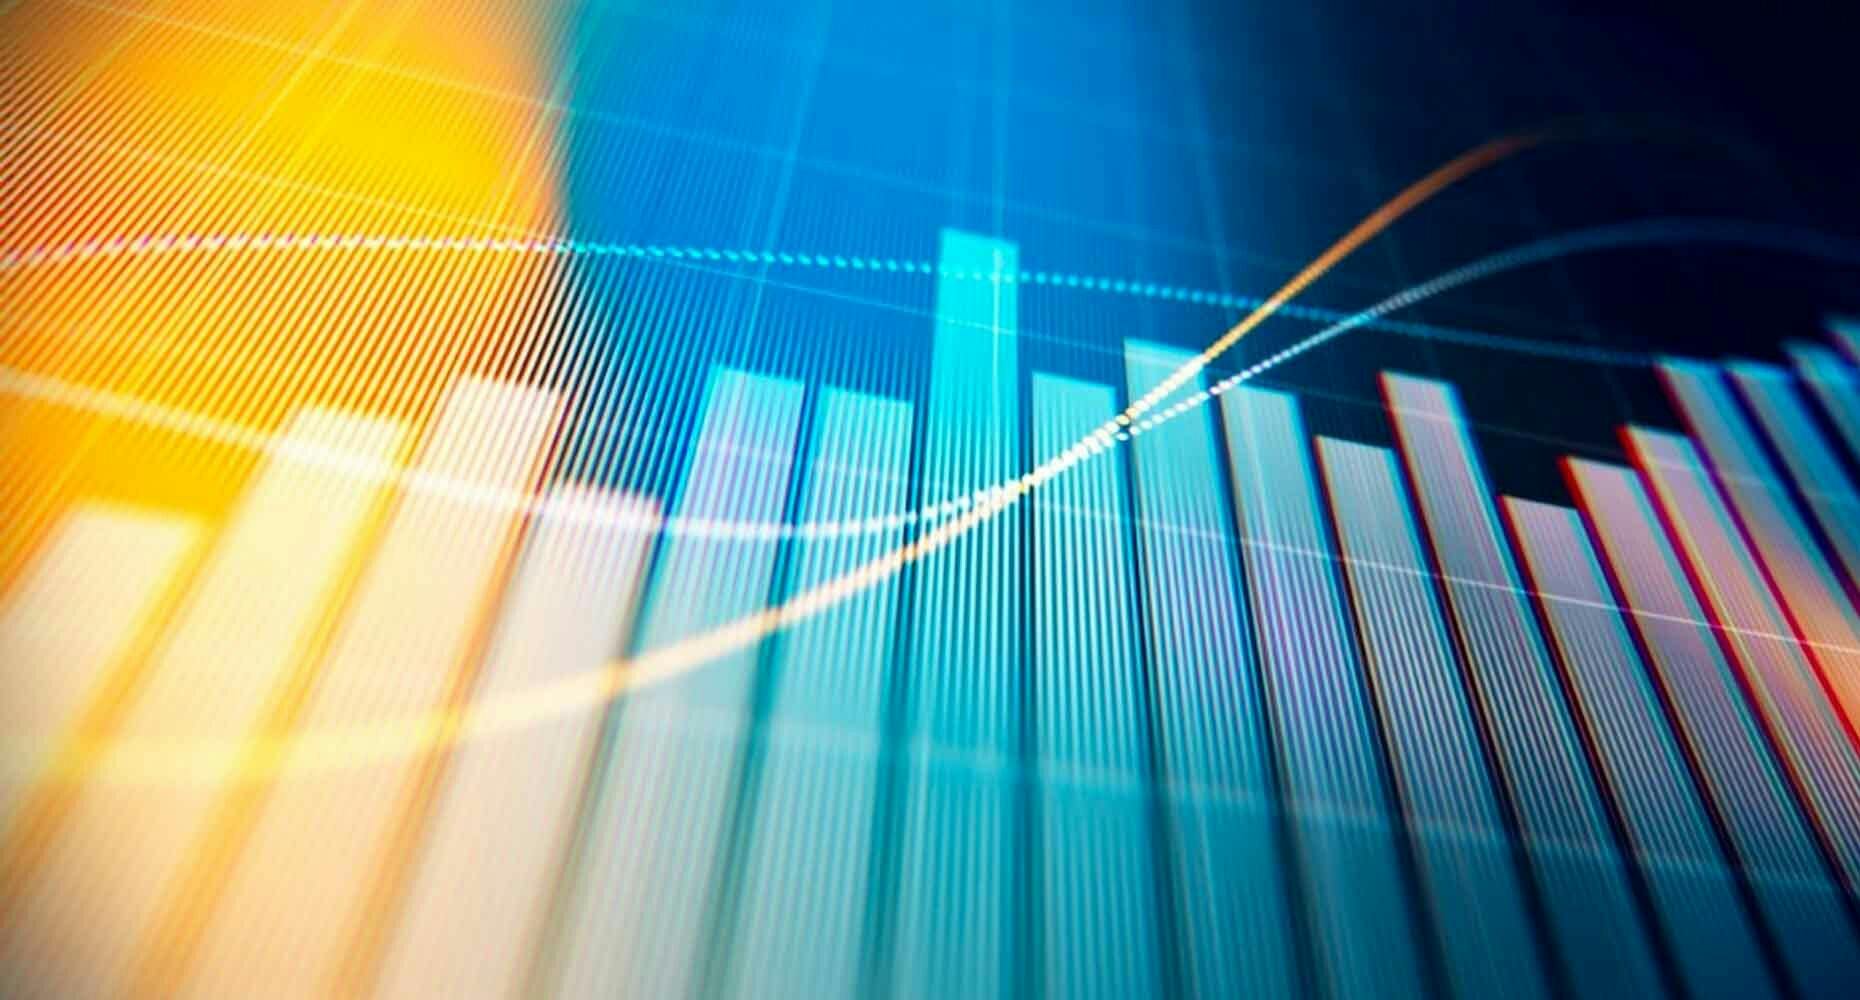 Financial data and charts